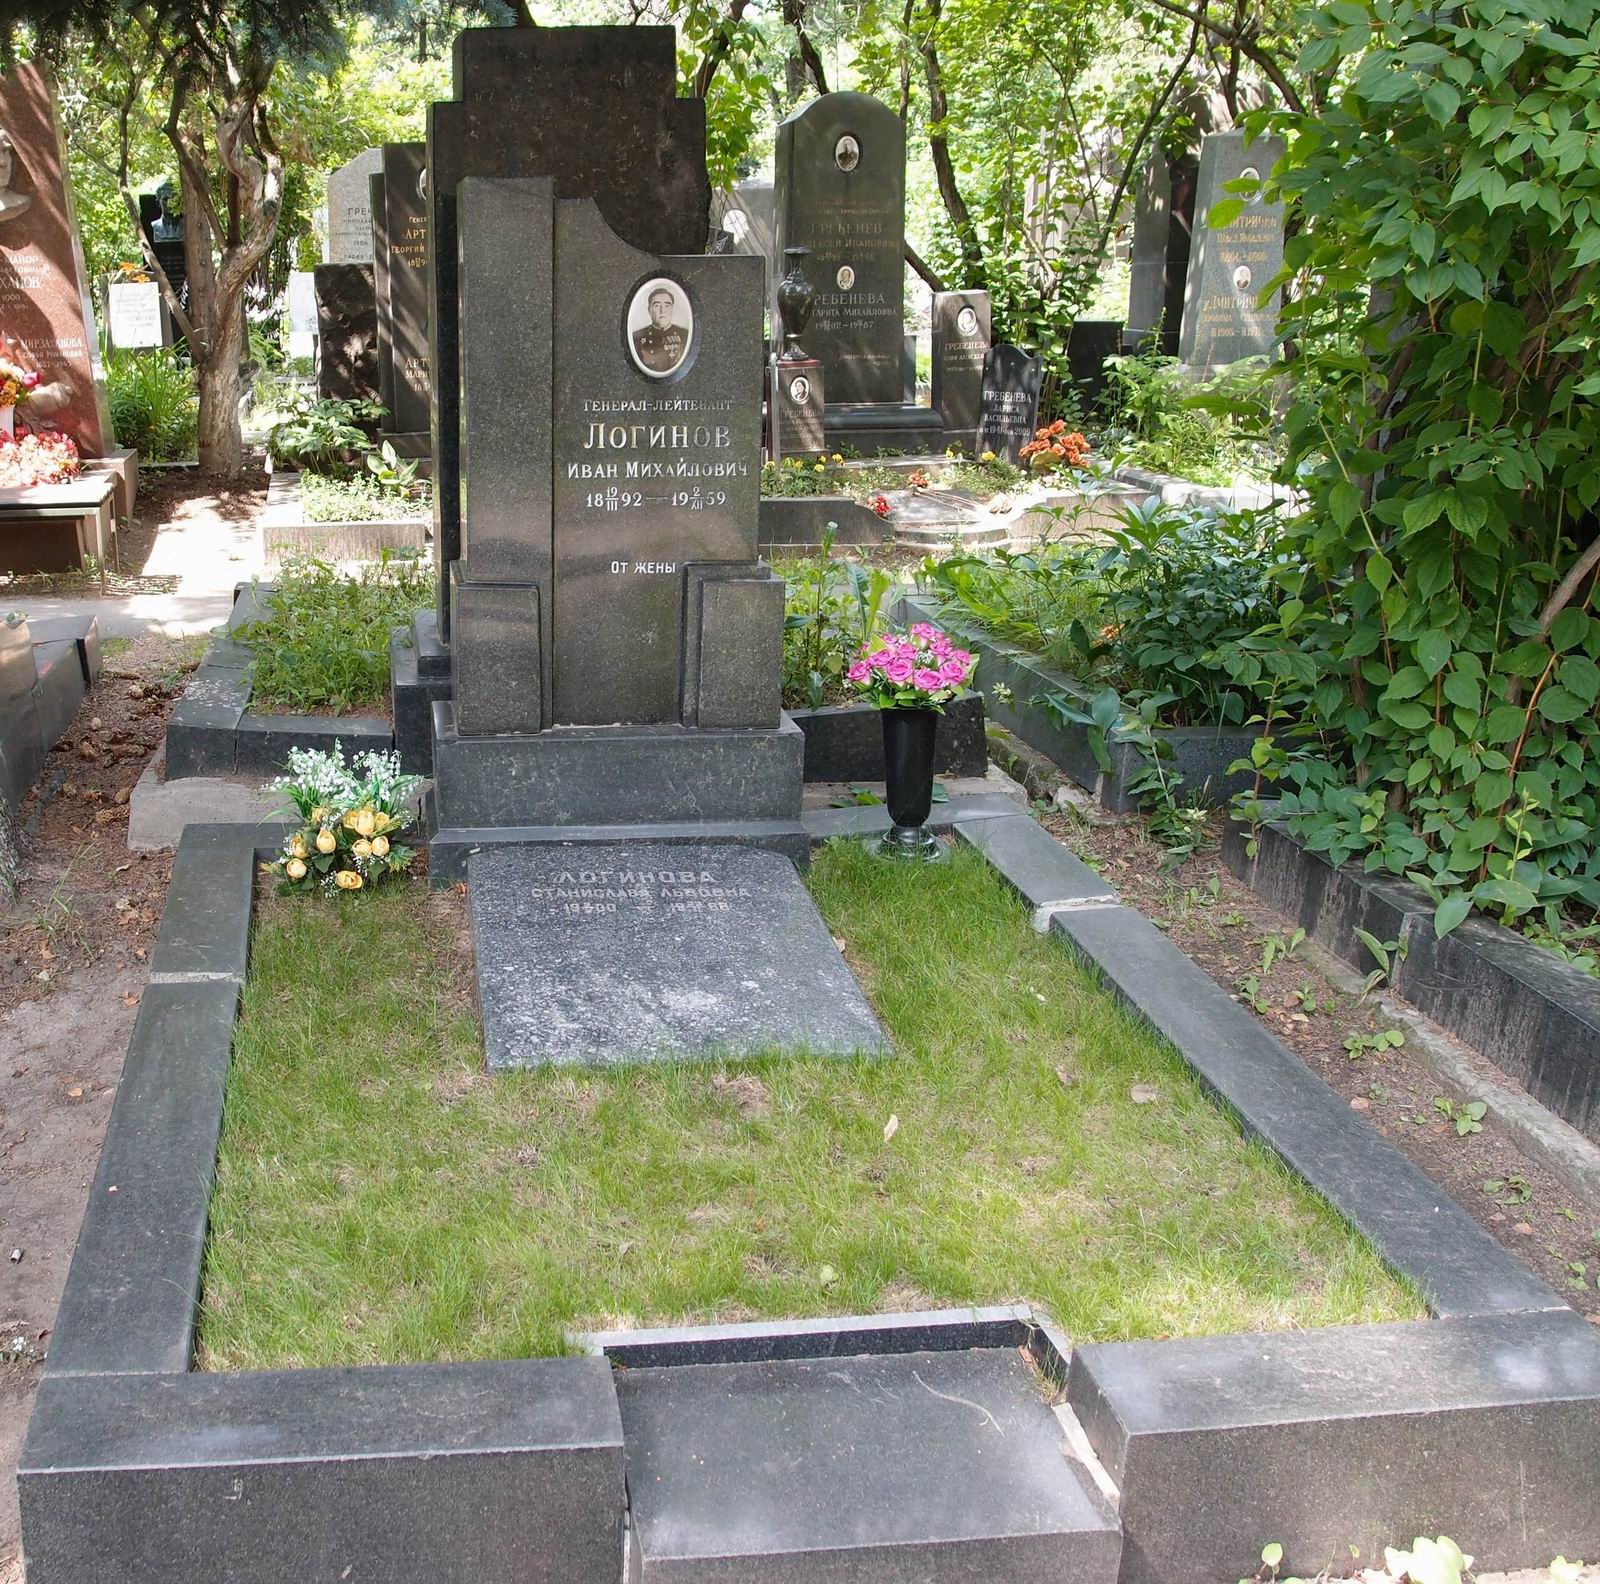 Памятник на могиле Логинова И.М. (1892-1959), на Новодевичьем кладбище (8-1-4).